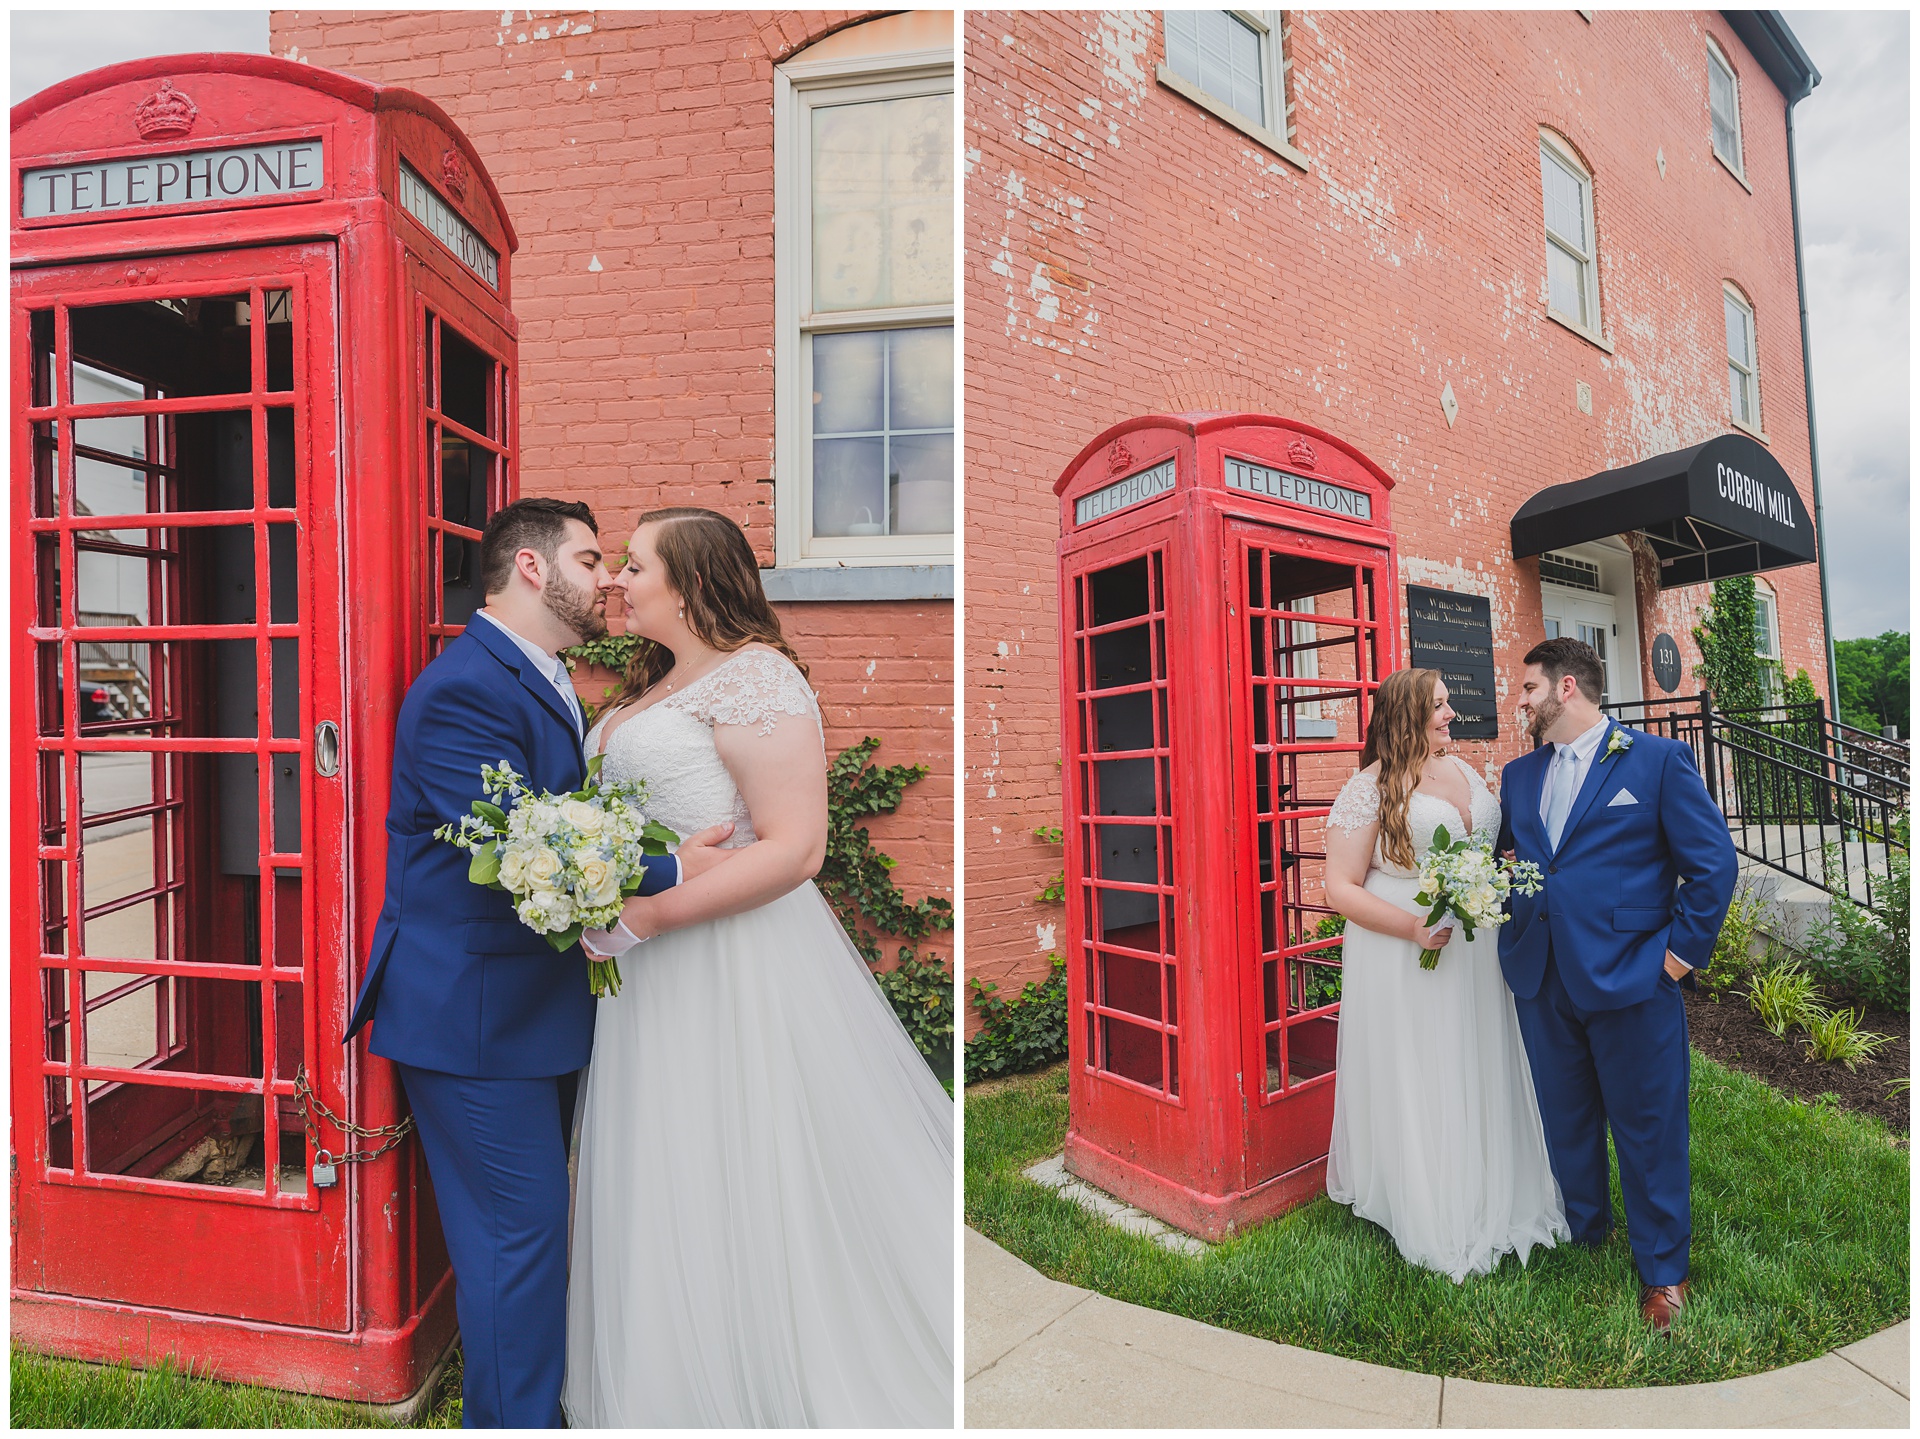 Wedding photography at Corbin Mill in Liberty, Missouri, by Kansas City wedding photographers Wisdom-Watson Weddings.